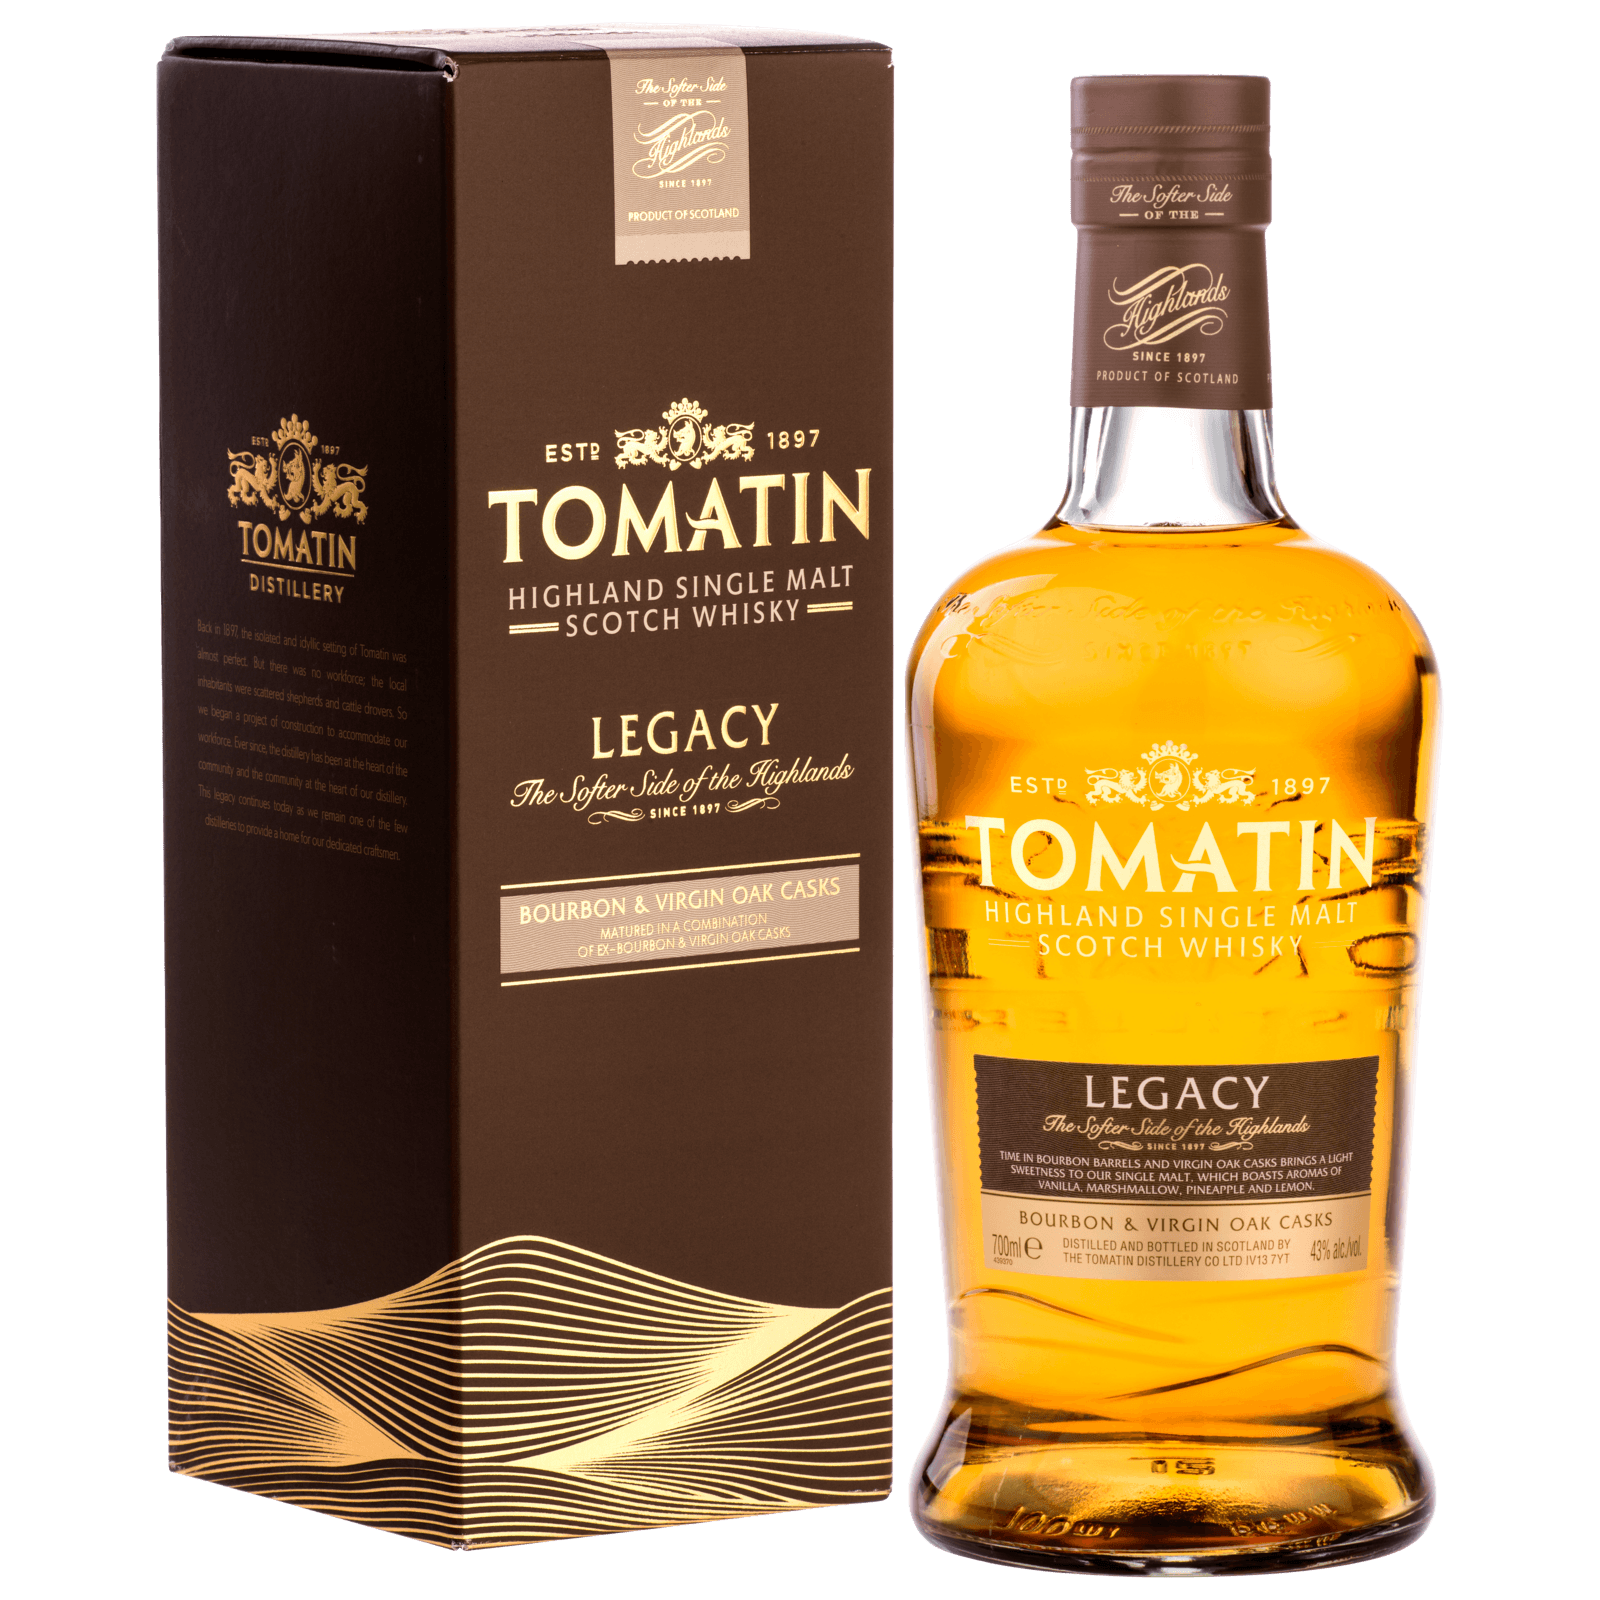 Tomatin Highland Single Malt Scotch online Legacy bestellen! 0,7l REWE Whisky bei